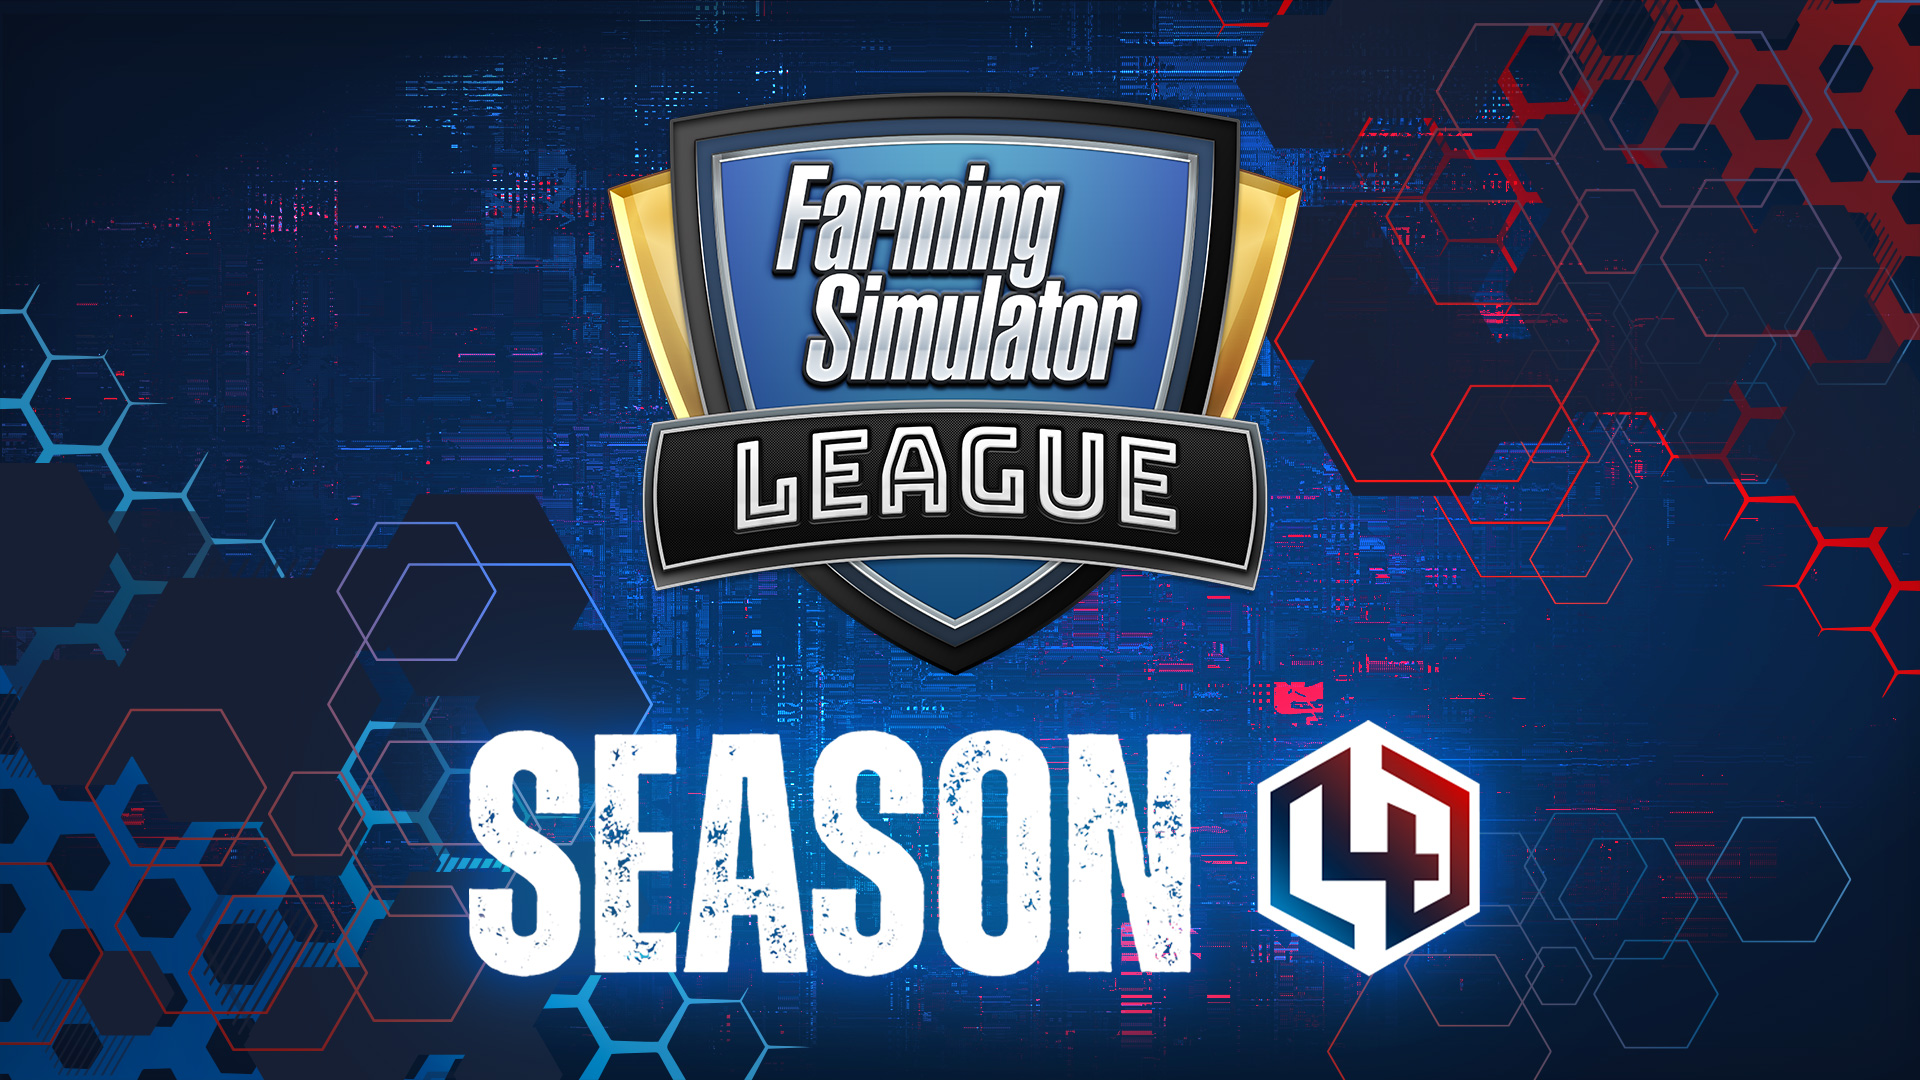 Farming Simulator League announces partners for Season 4, Nexus Gaming LLC